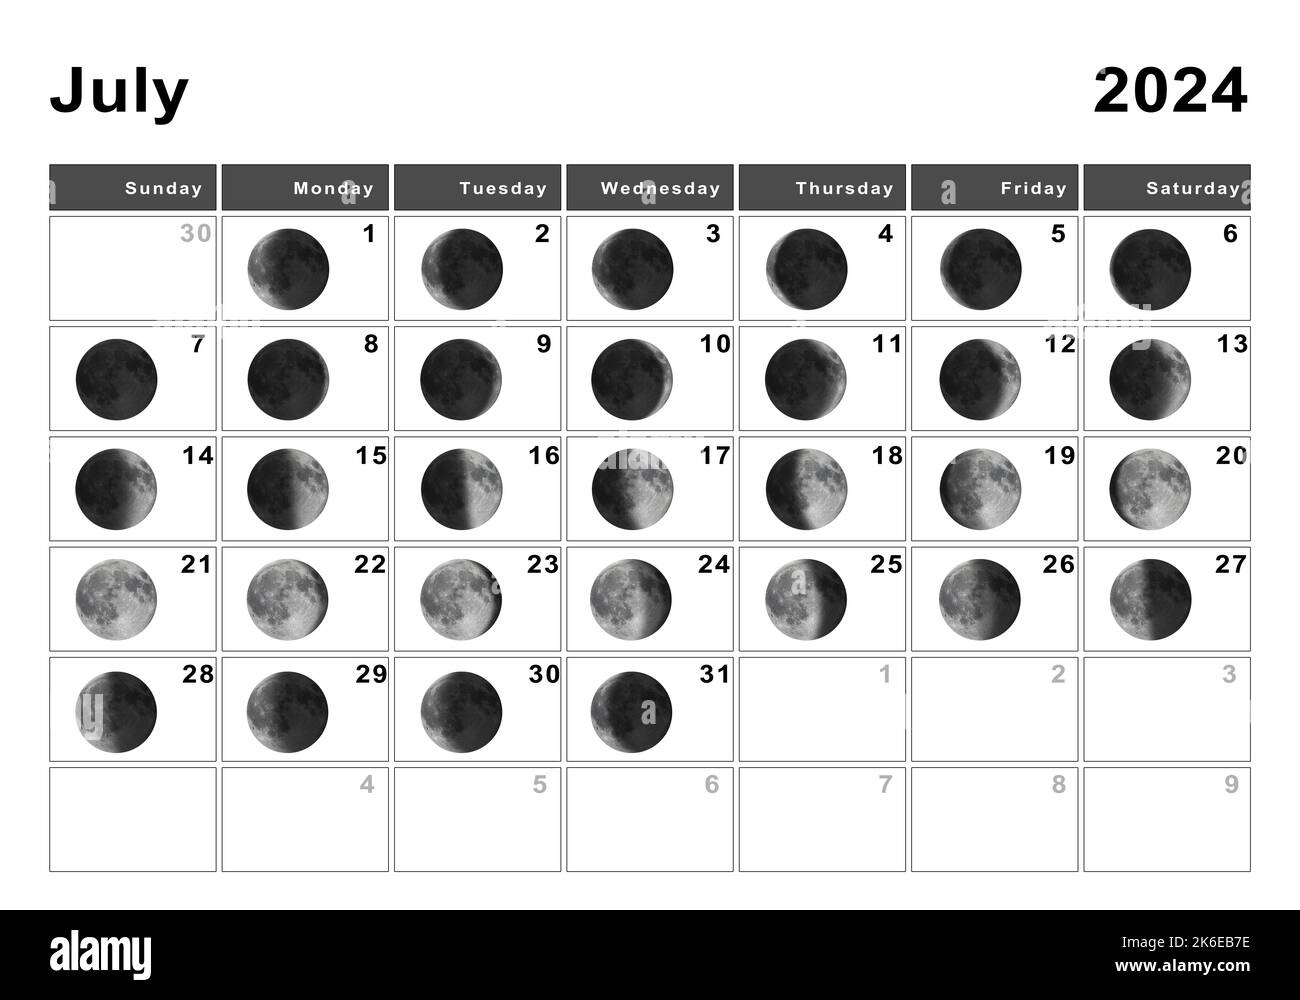 July 2024 Lunar Calendar, Moon Cycles, Moon Phases Stock Photo - Alamy with regard to July 15 Lunar Calendar 2024